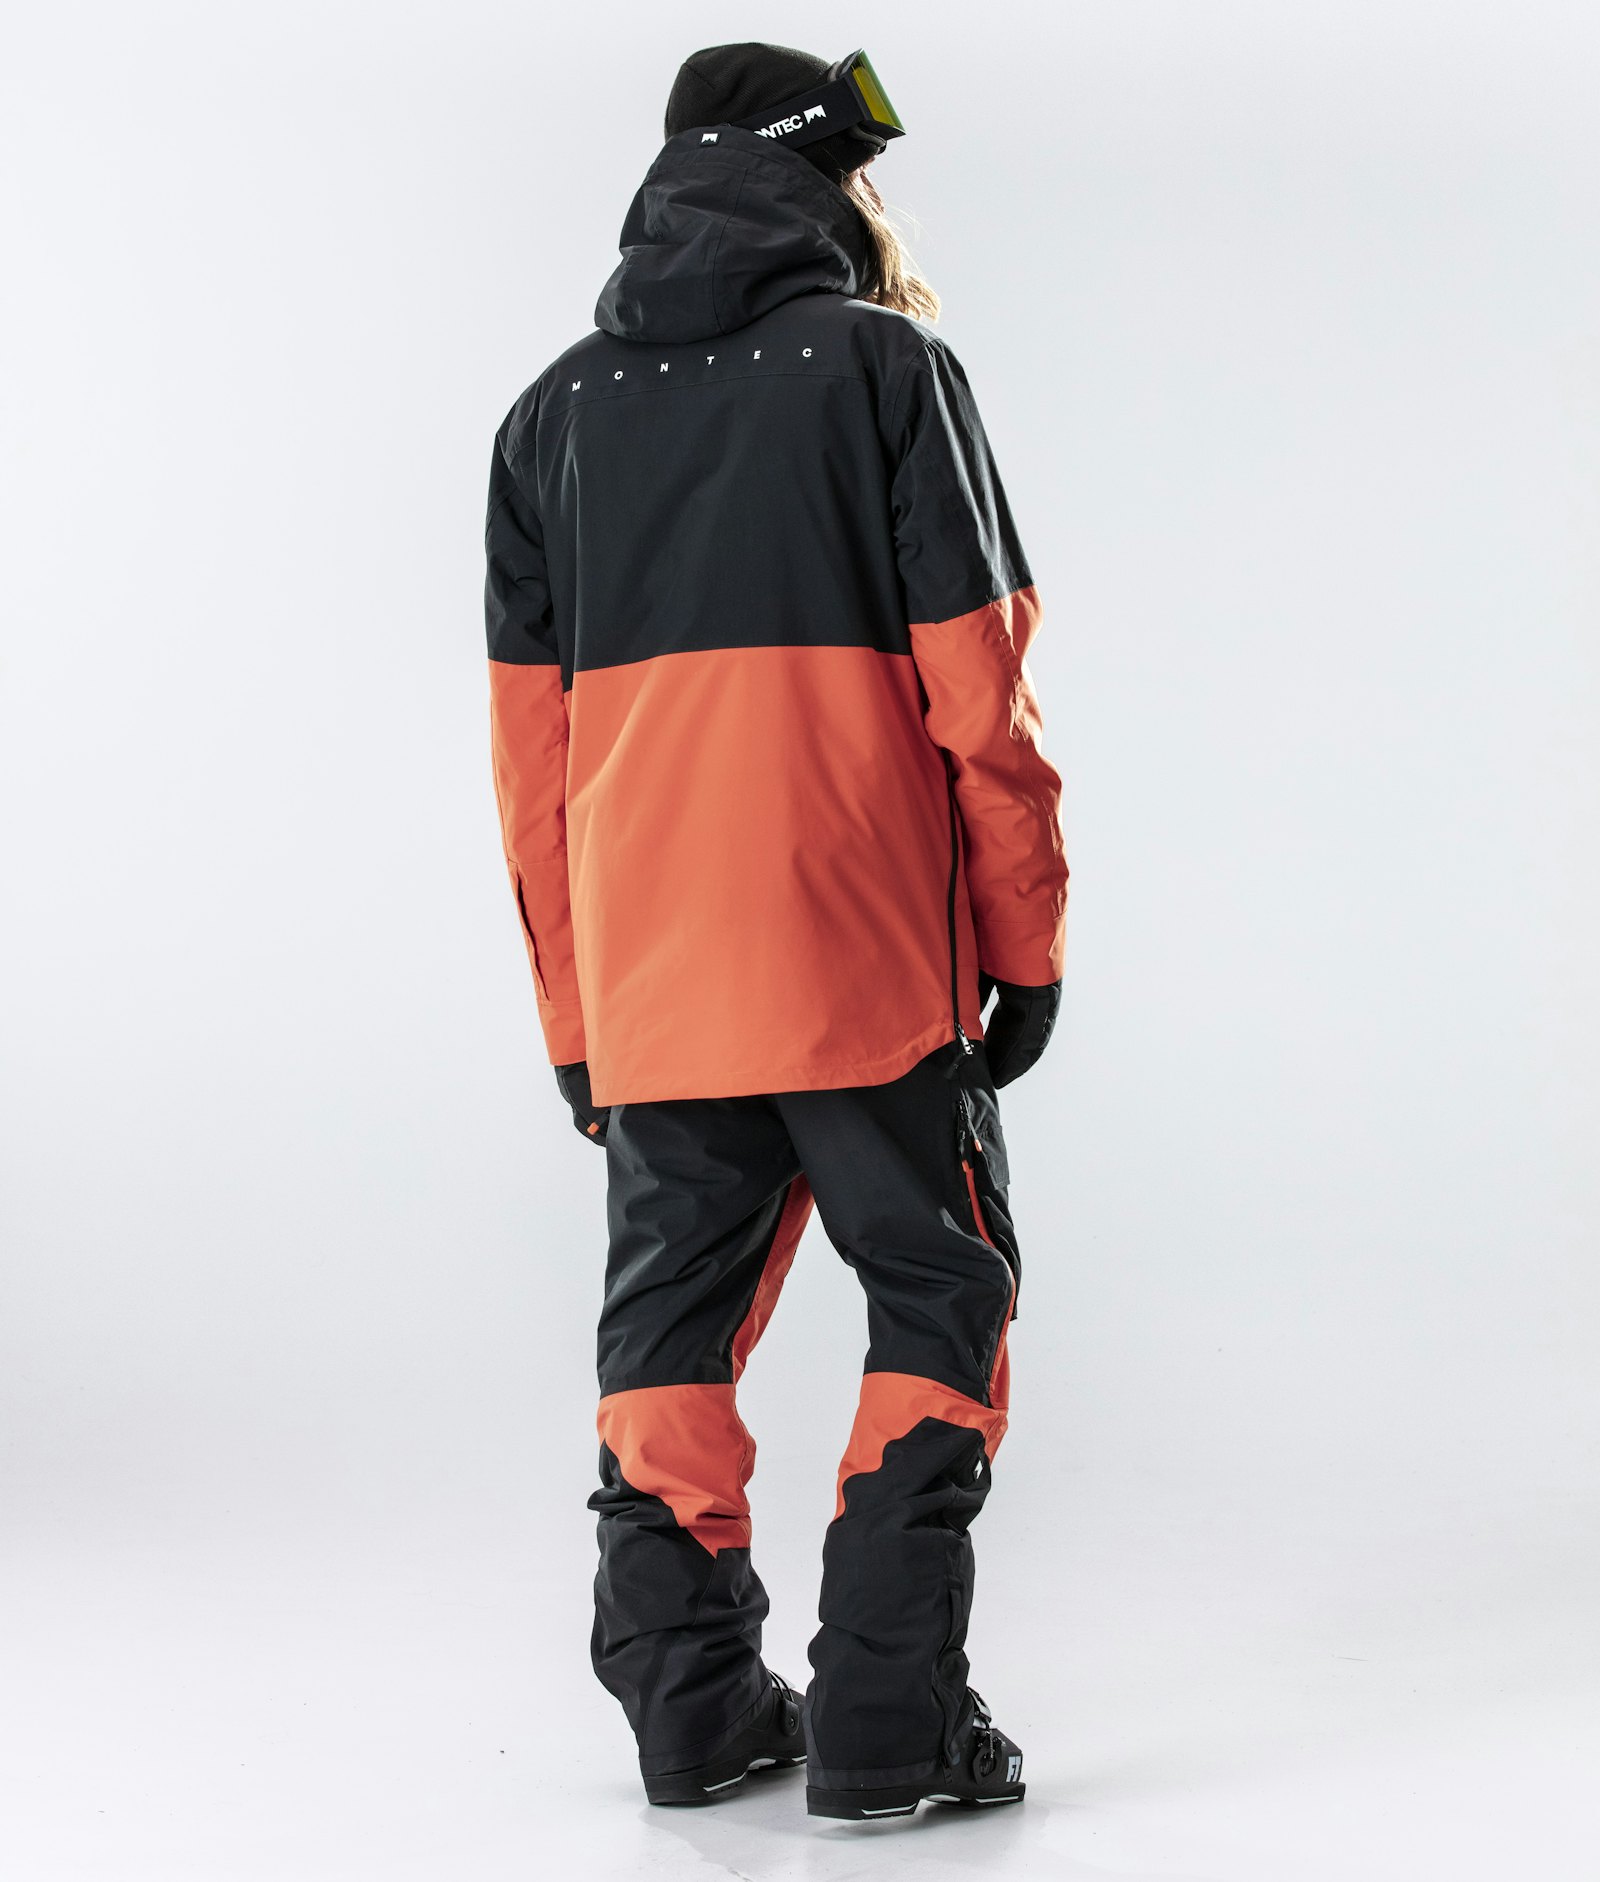 Dune 2020 Skijacke Herren Black/Orange